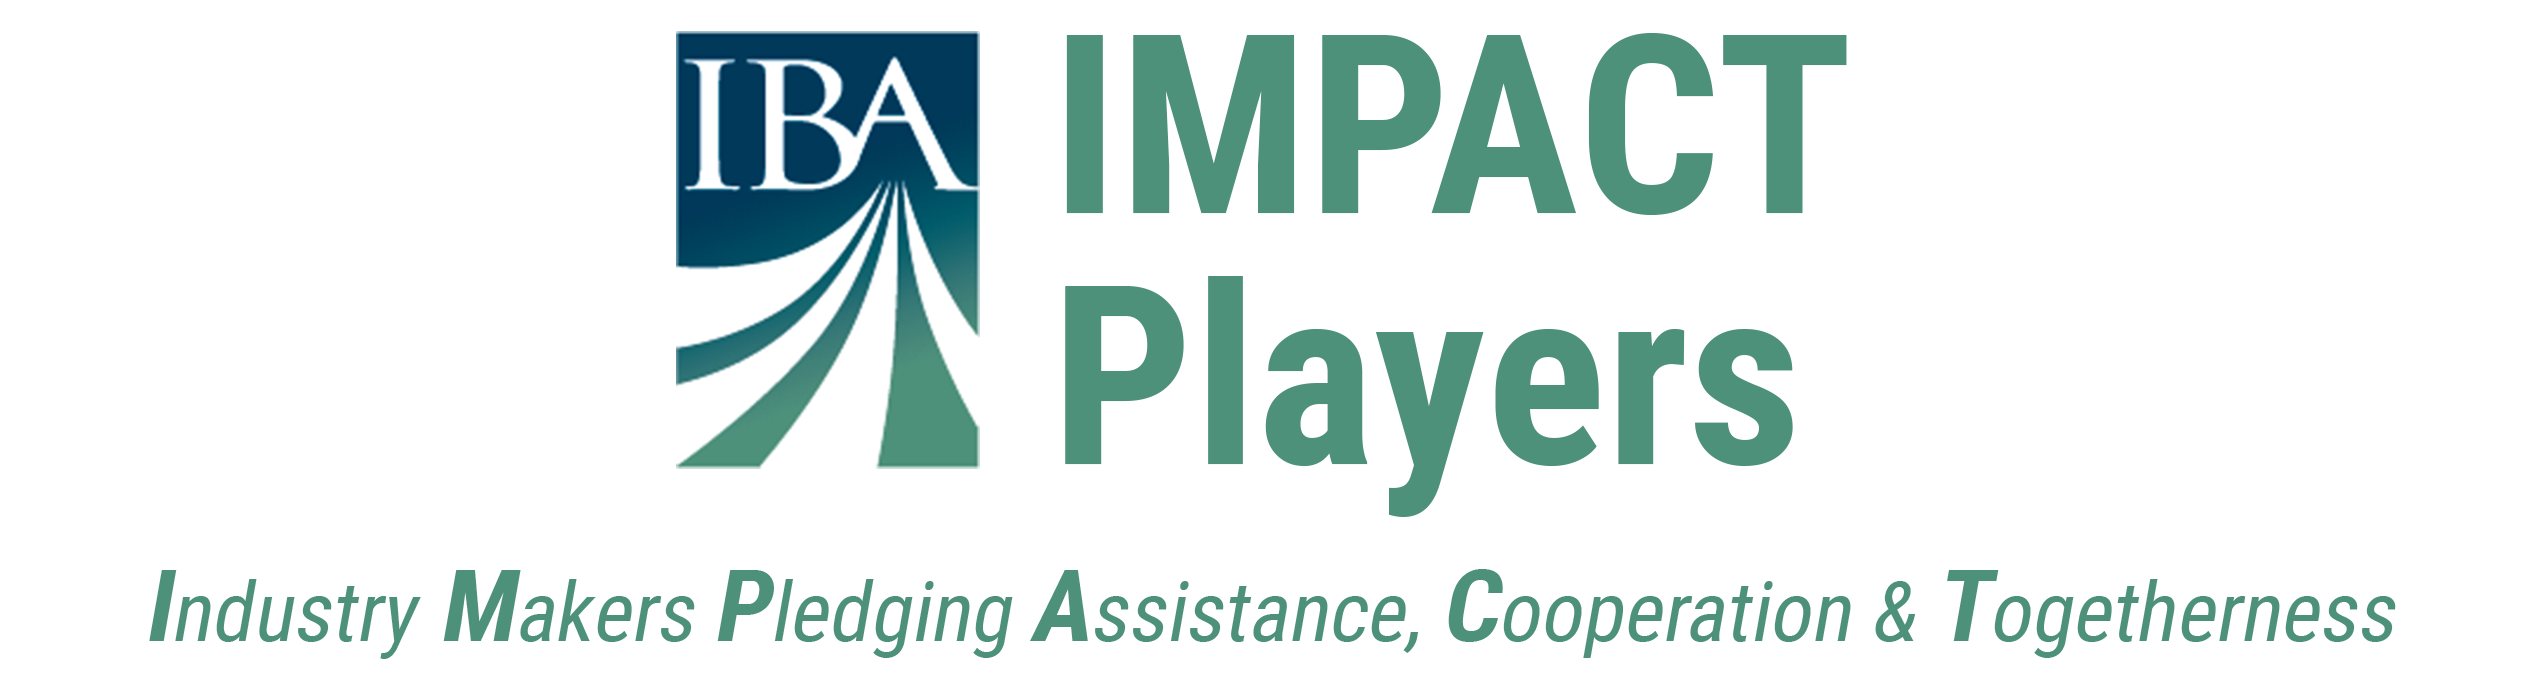 IBA IMPACT Player Image